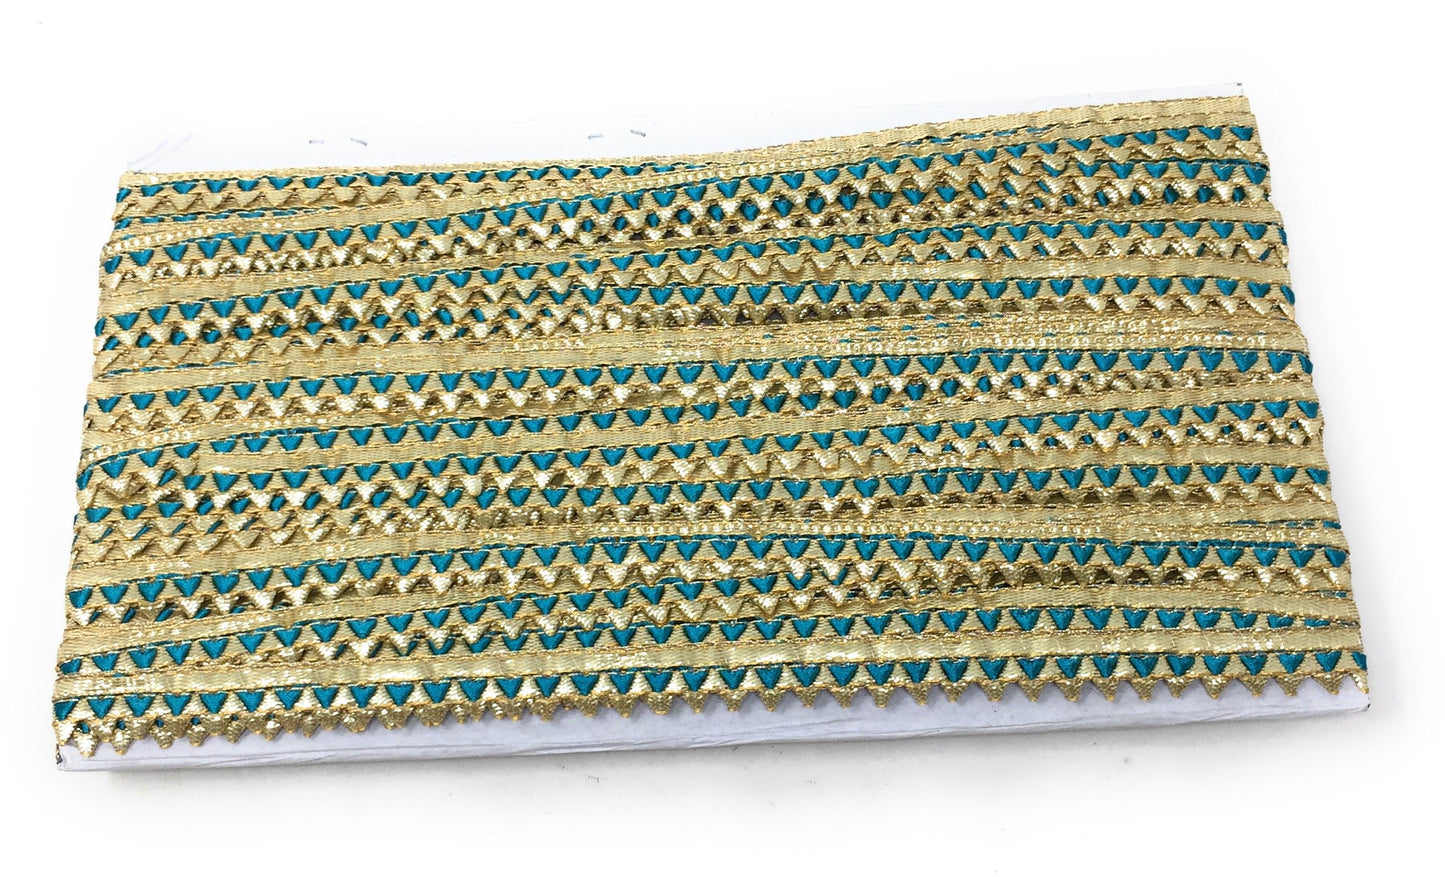 Teal Green Gota Patti Embroidery Saree Border Trim - 9 Meter Roll